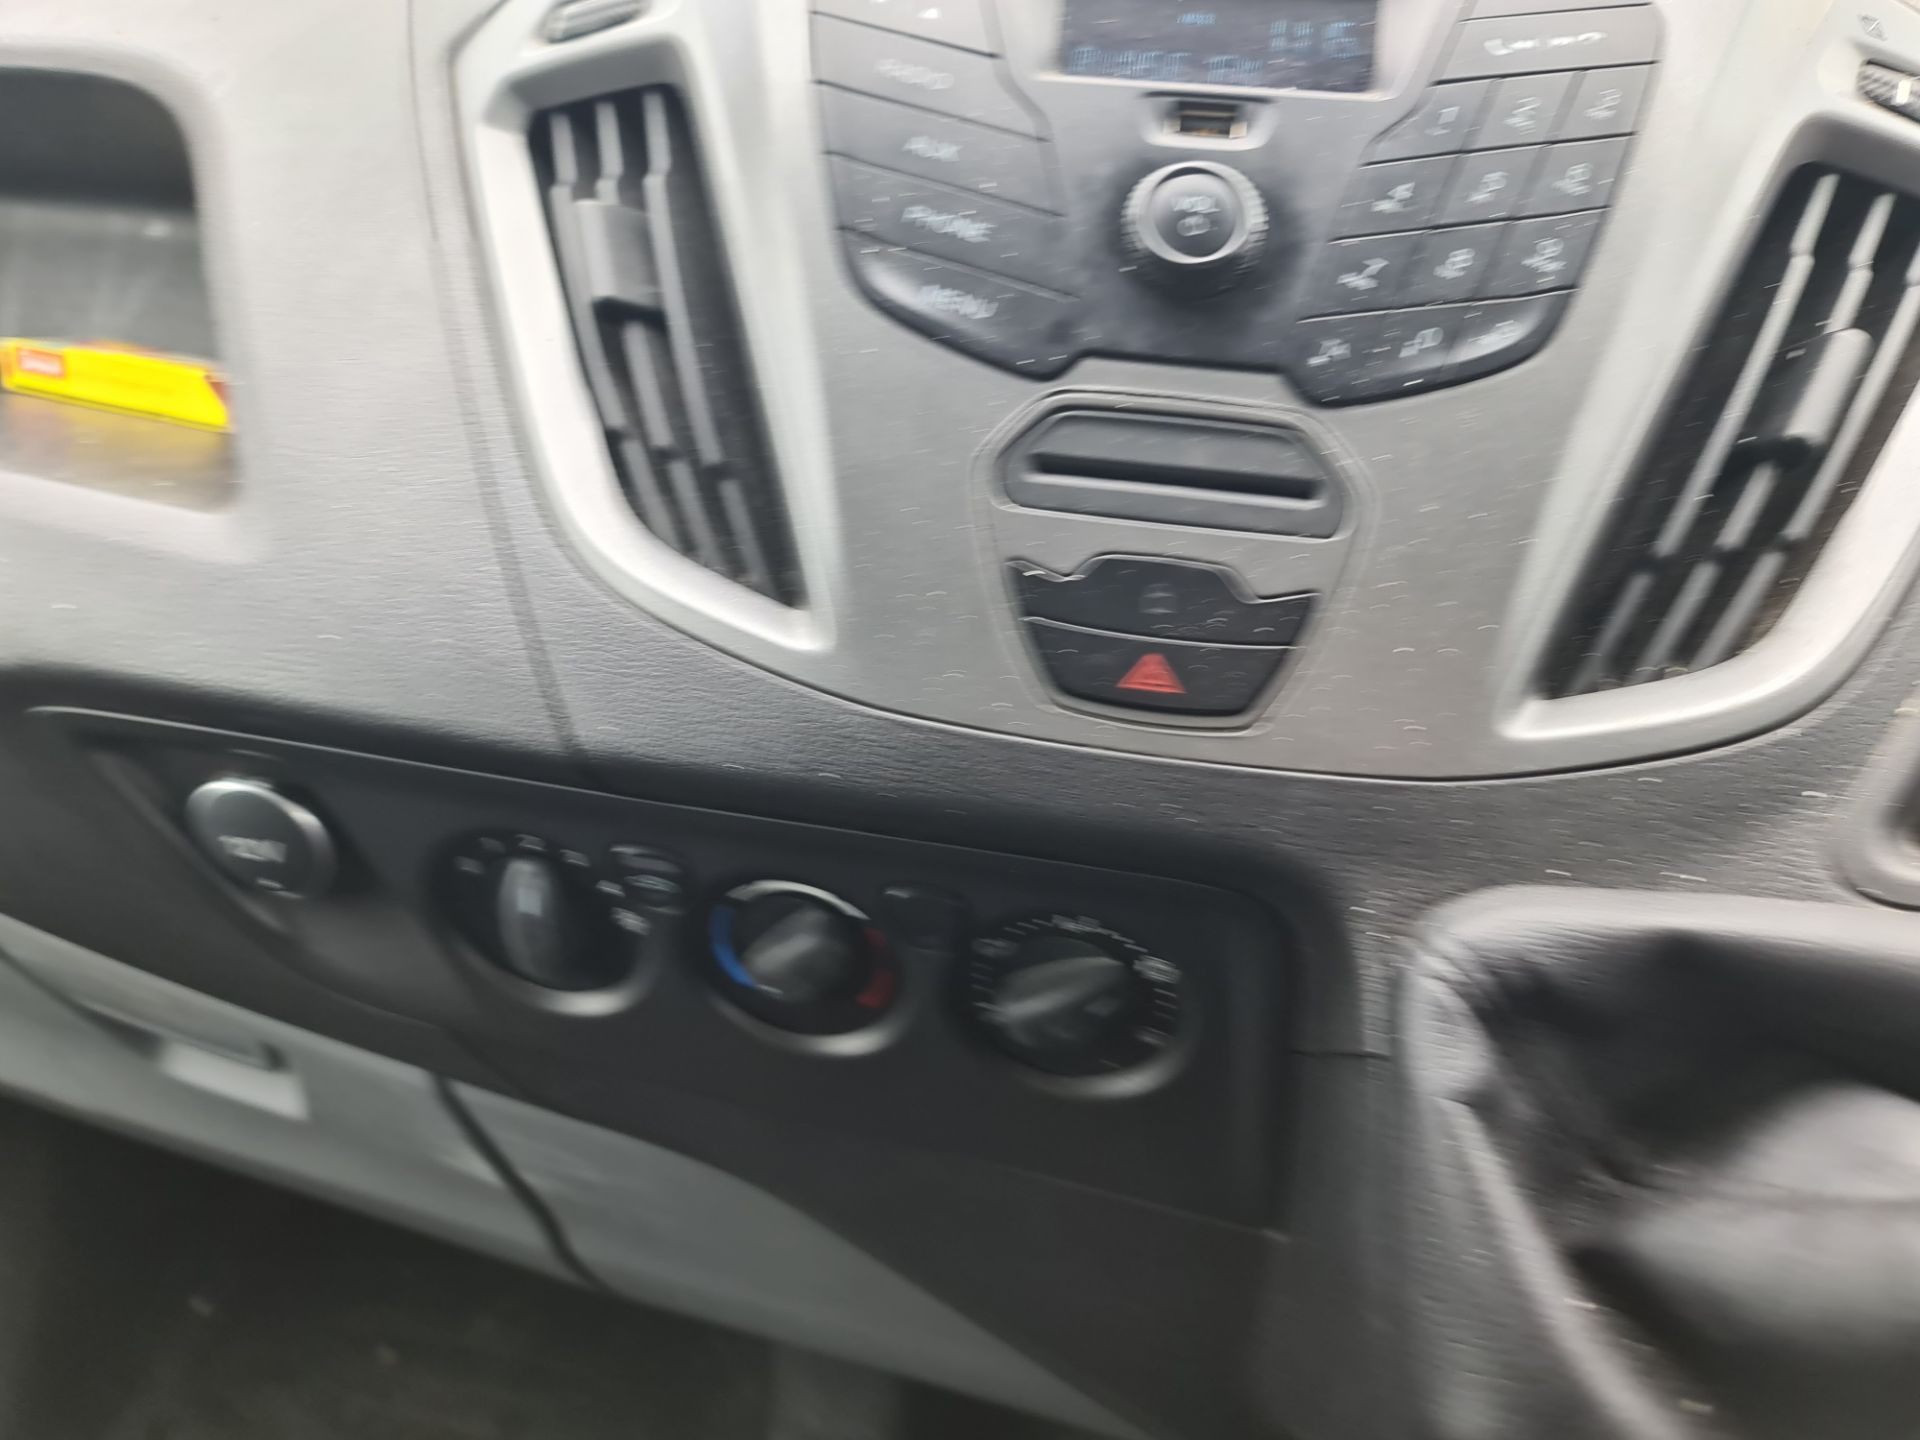 2018 Ford Transit Custom 270 panel van - Image 71 of 74